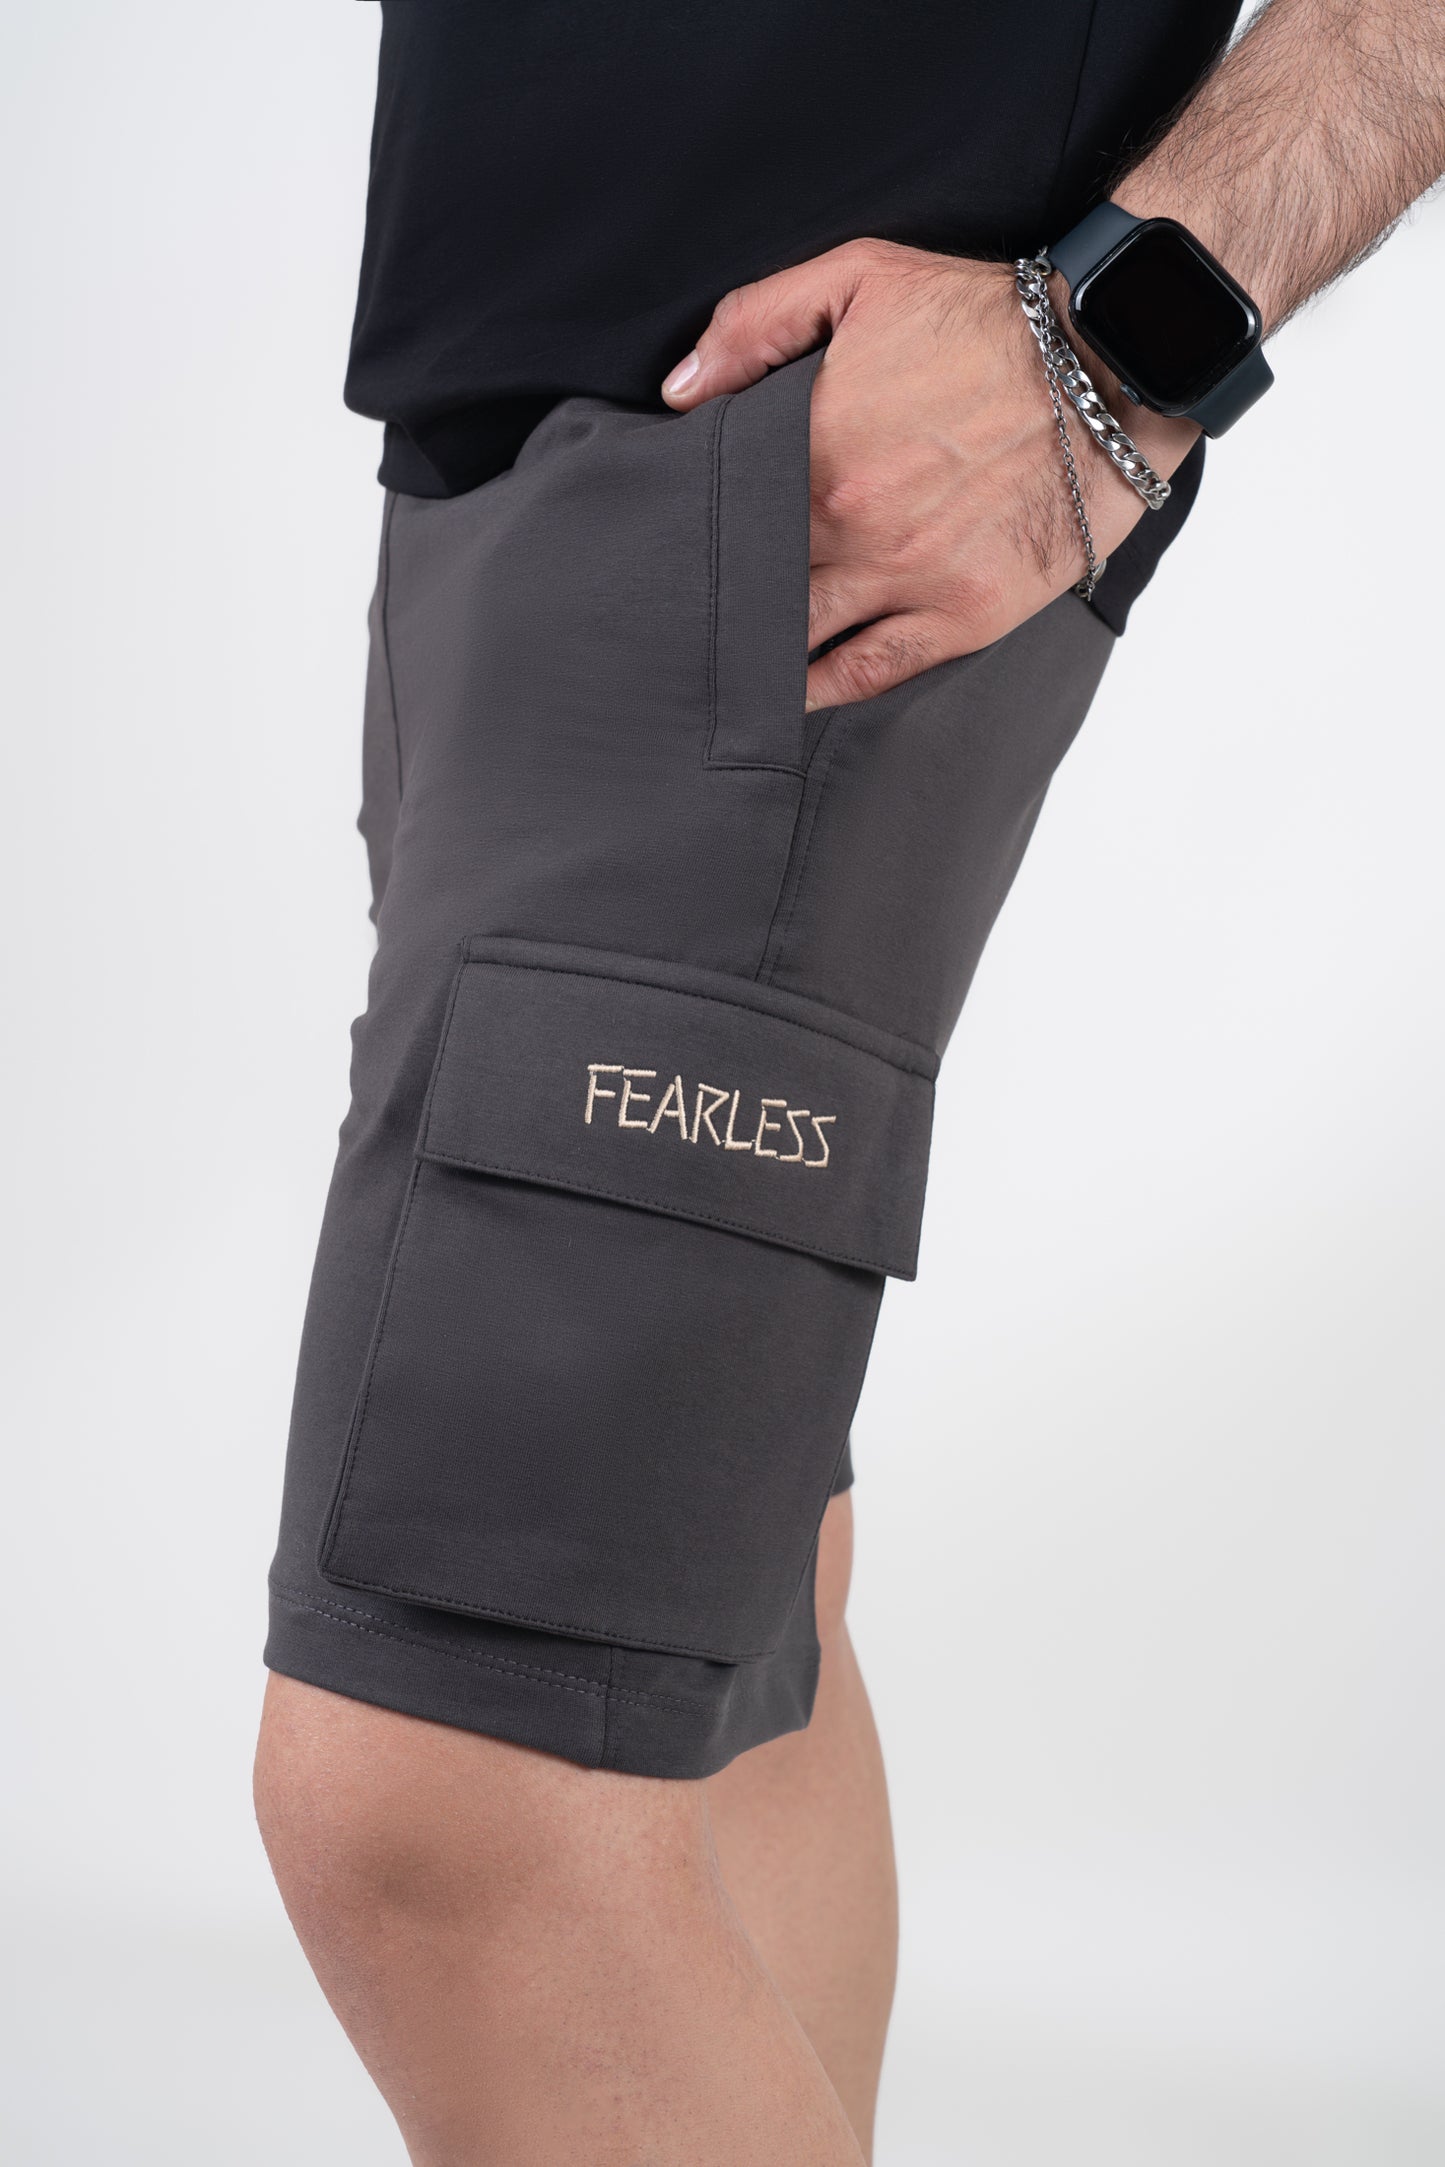 Fearless Cargo Shorts For Men - Steel Grey